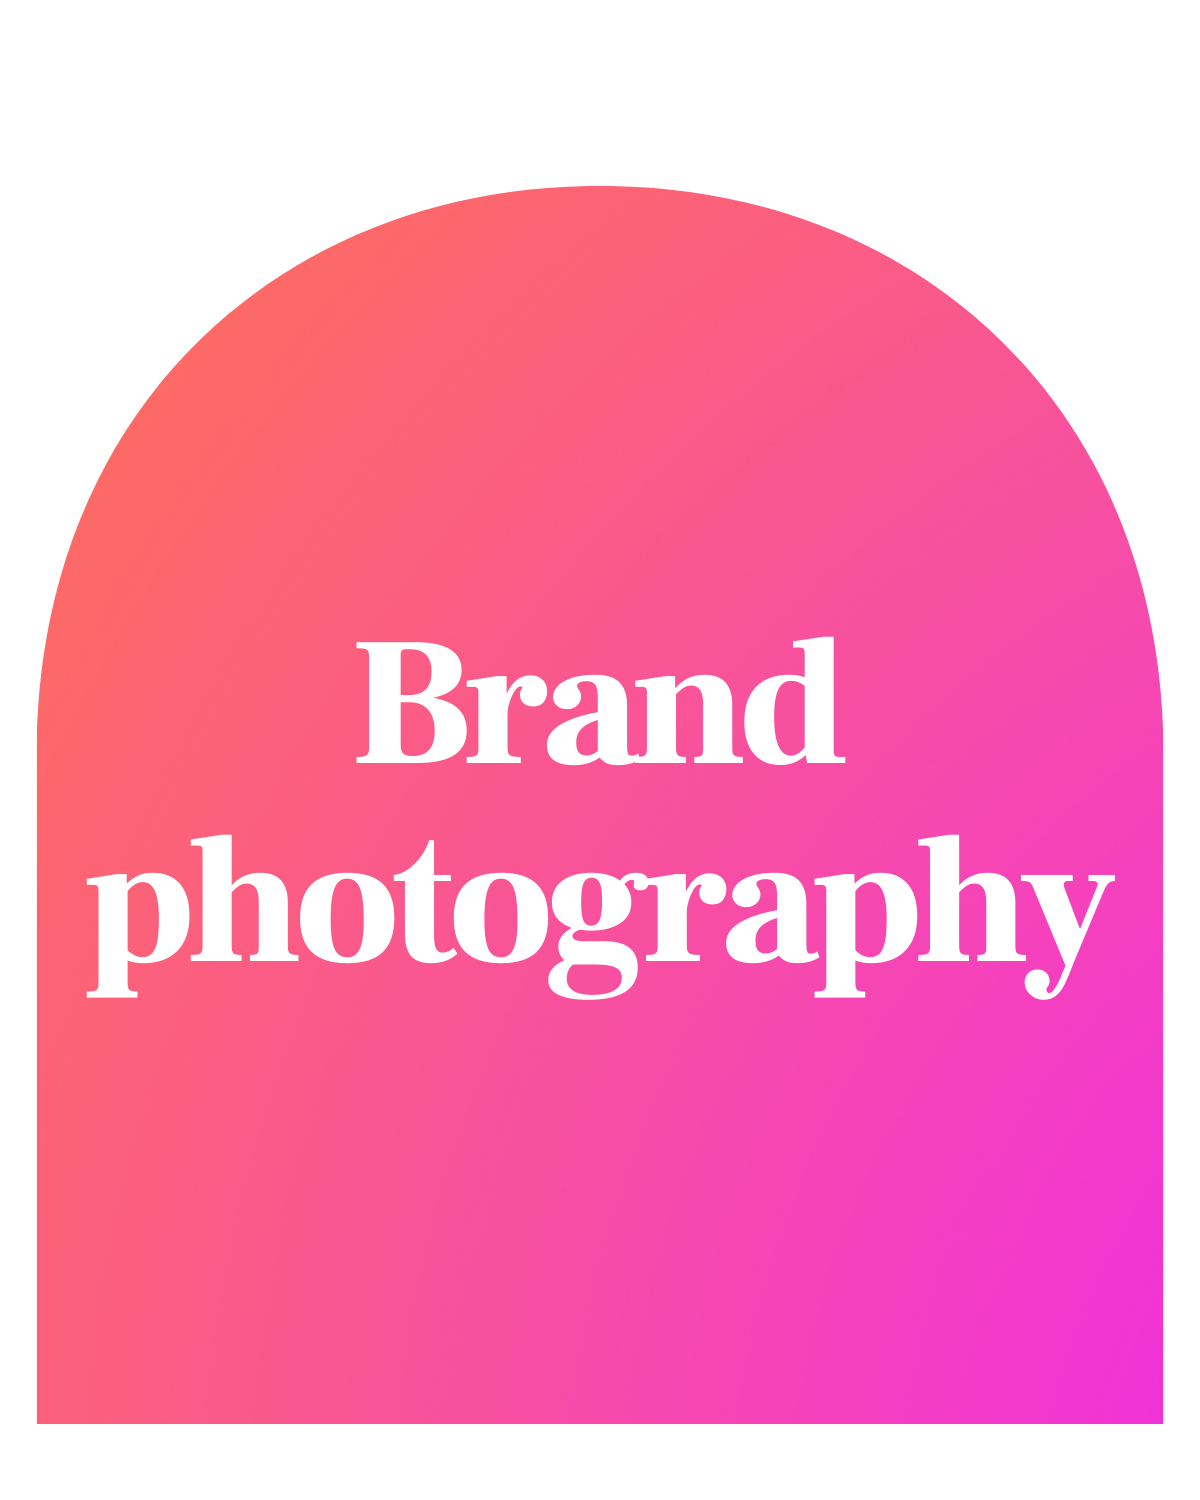 Brand photography